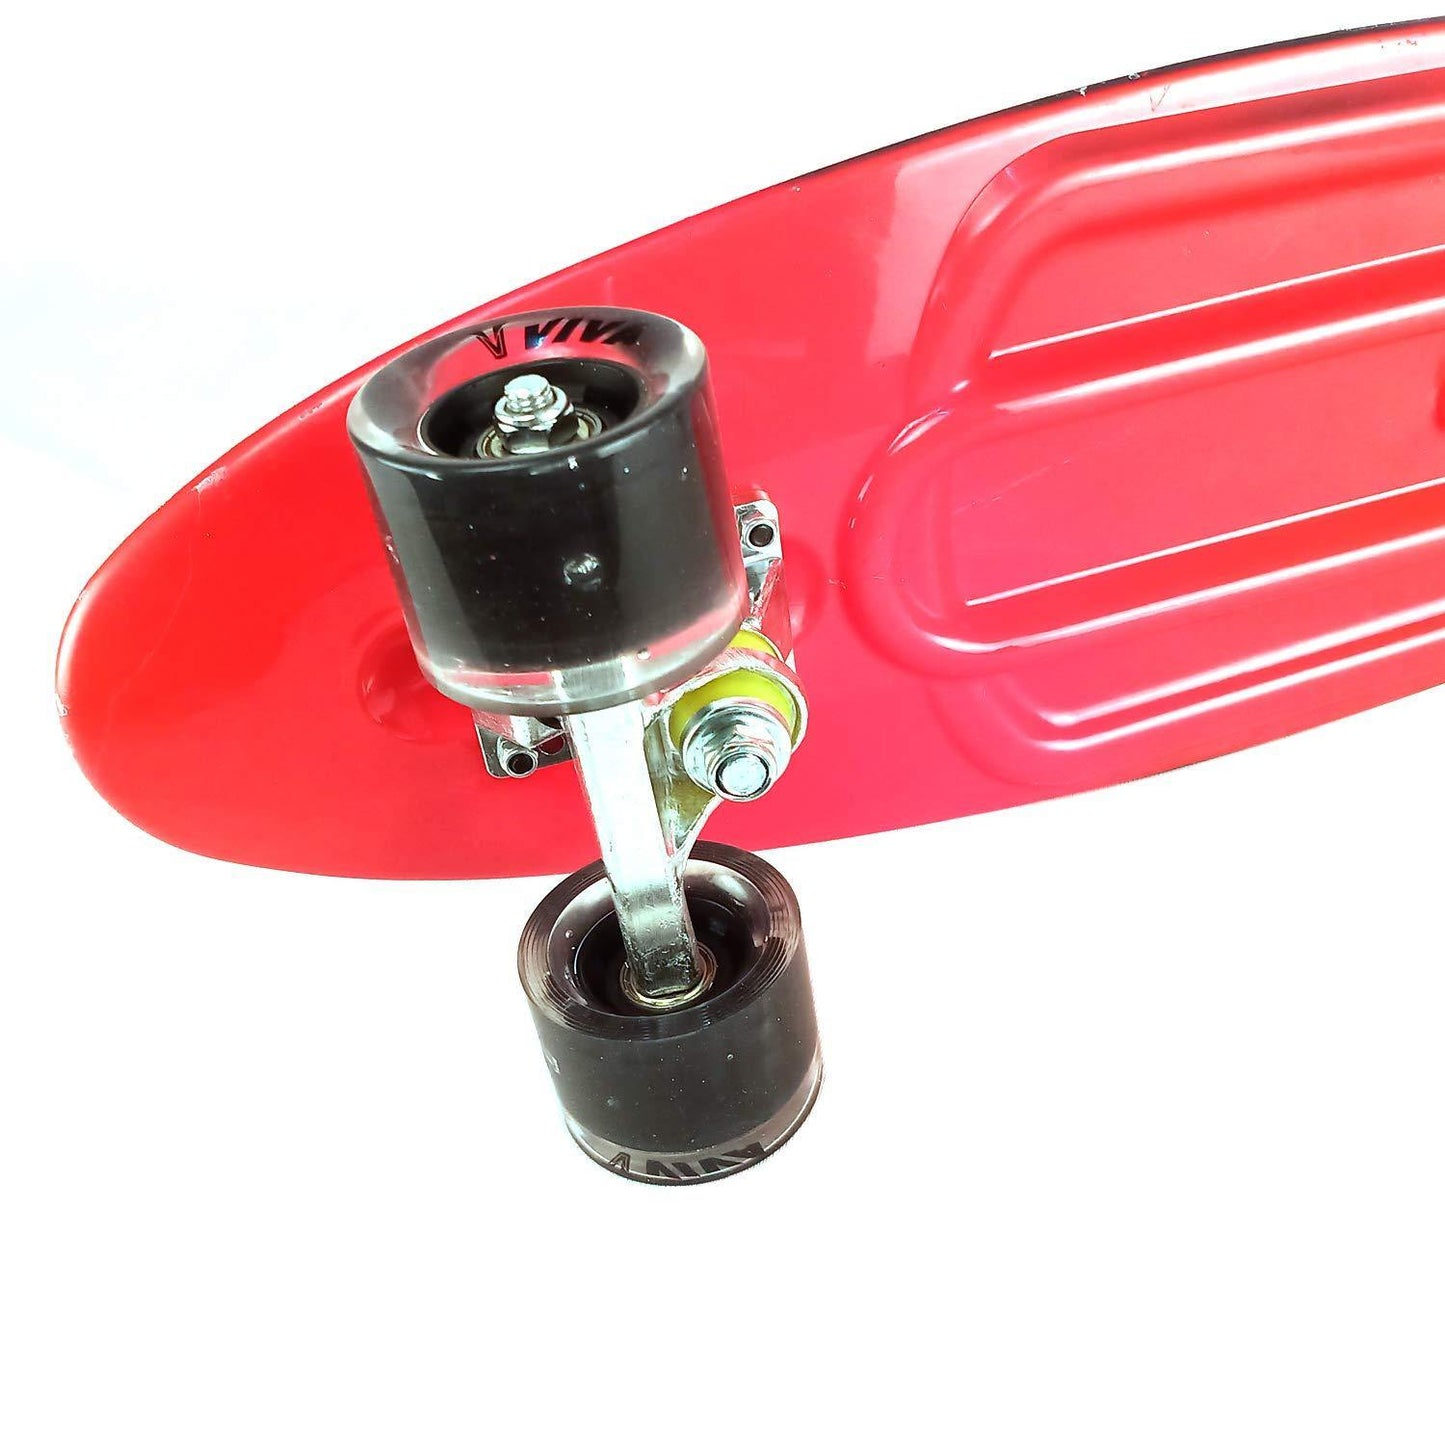 Prokick Skateboard with Flashlight Wheels - Senior  - Blue (26 x 7 Inches) - Best Price online Prokicksports.com